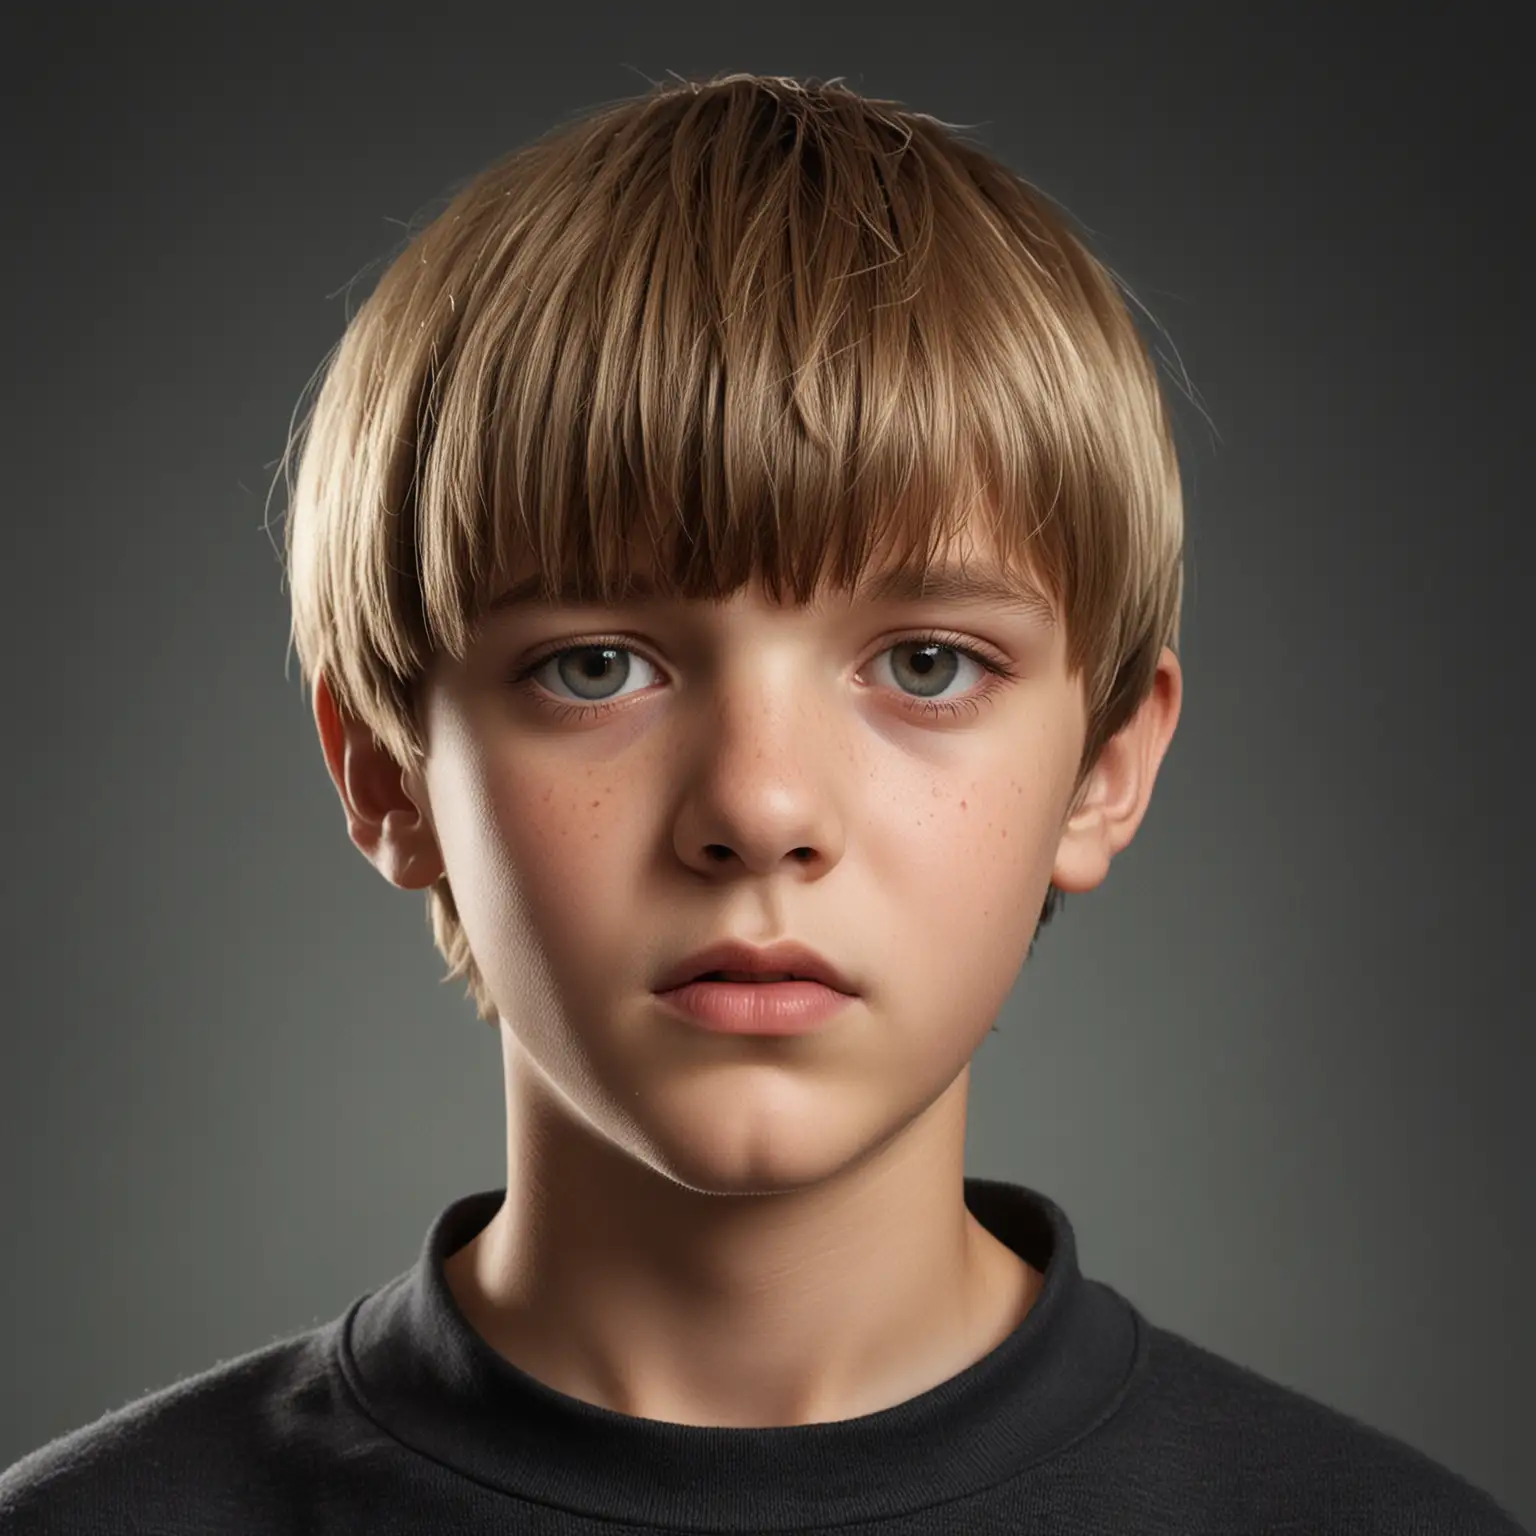 Studio Quality Headshot of ElevenYearOld Boy with Shiny Bowl Cut Hair